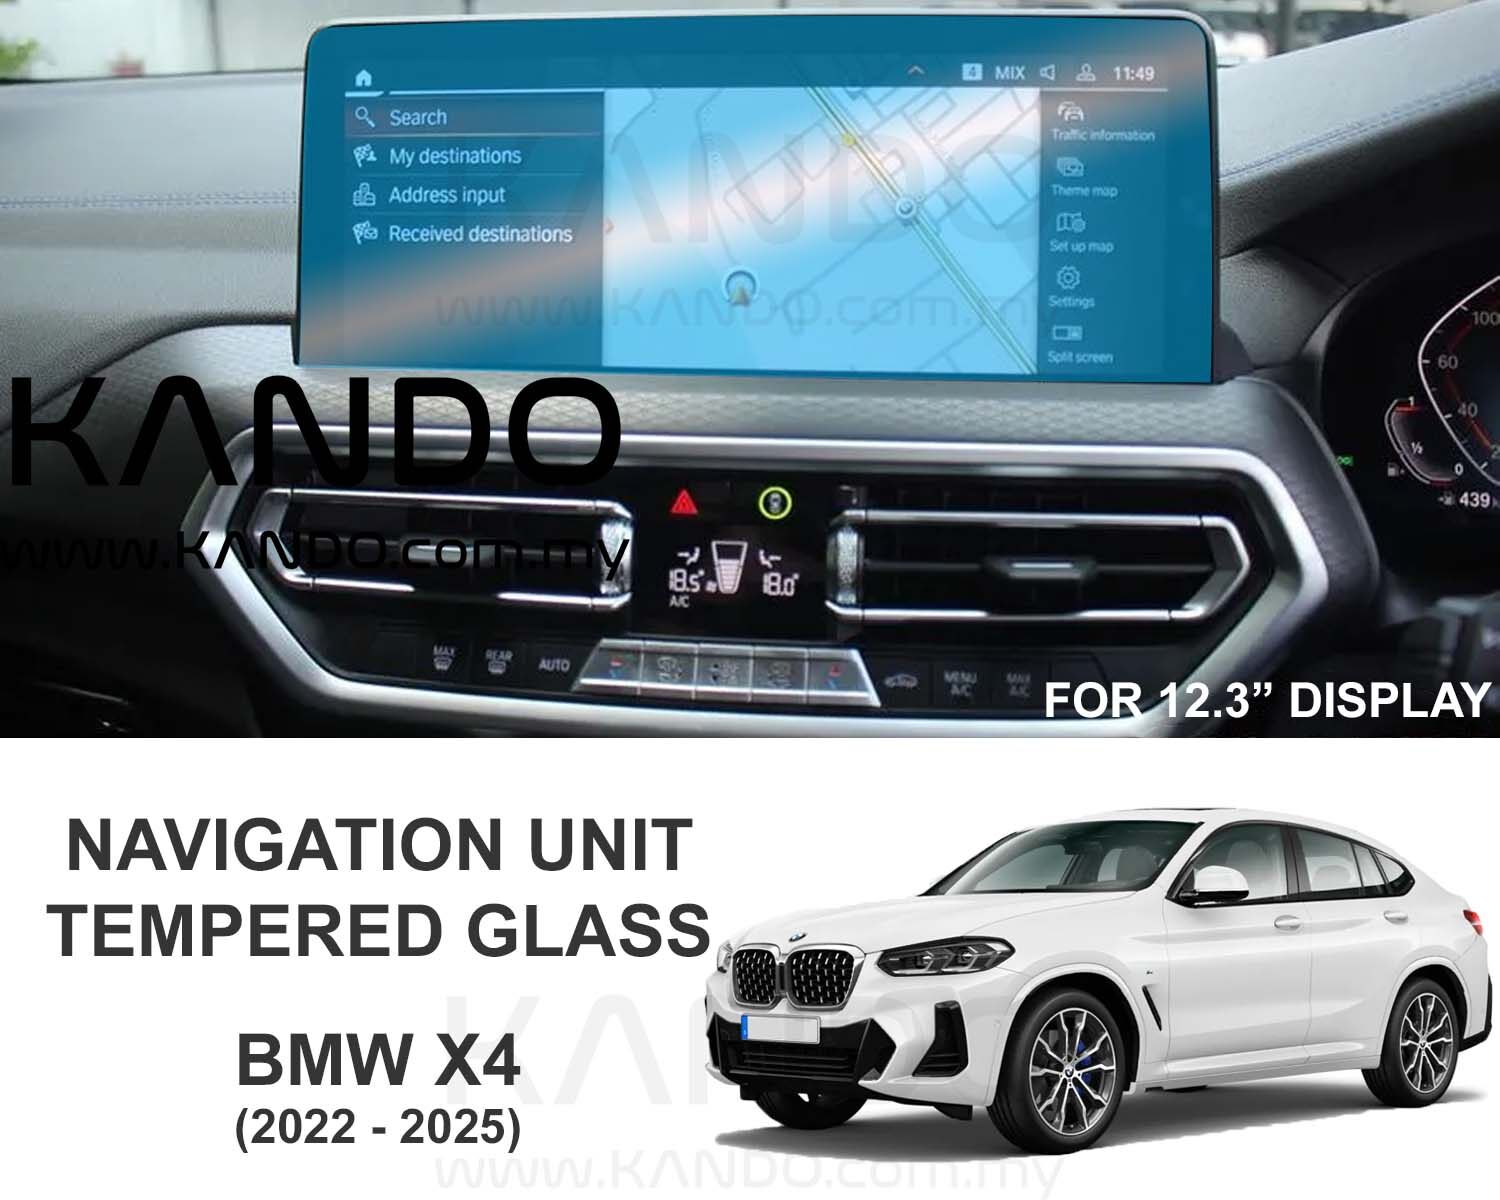 BMW X4 Tempered Glass Protector BMW G02 X4 LCI Tempered Glass Protector BMW G02 X4 Tempered Glass Protector BMW X4 Head Unit Glass BMW X4 GPS Glass Protector BMW X4 Glass Protector